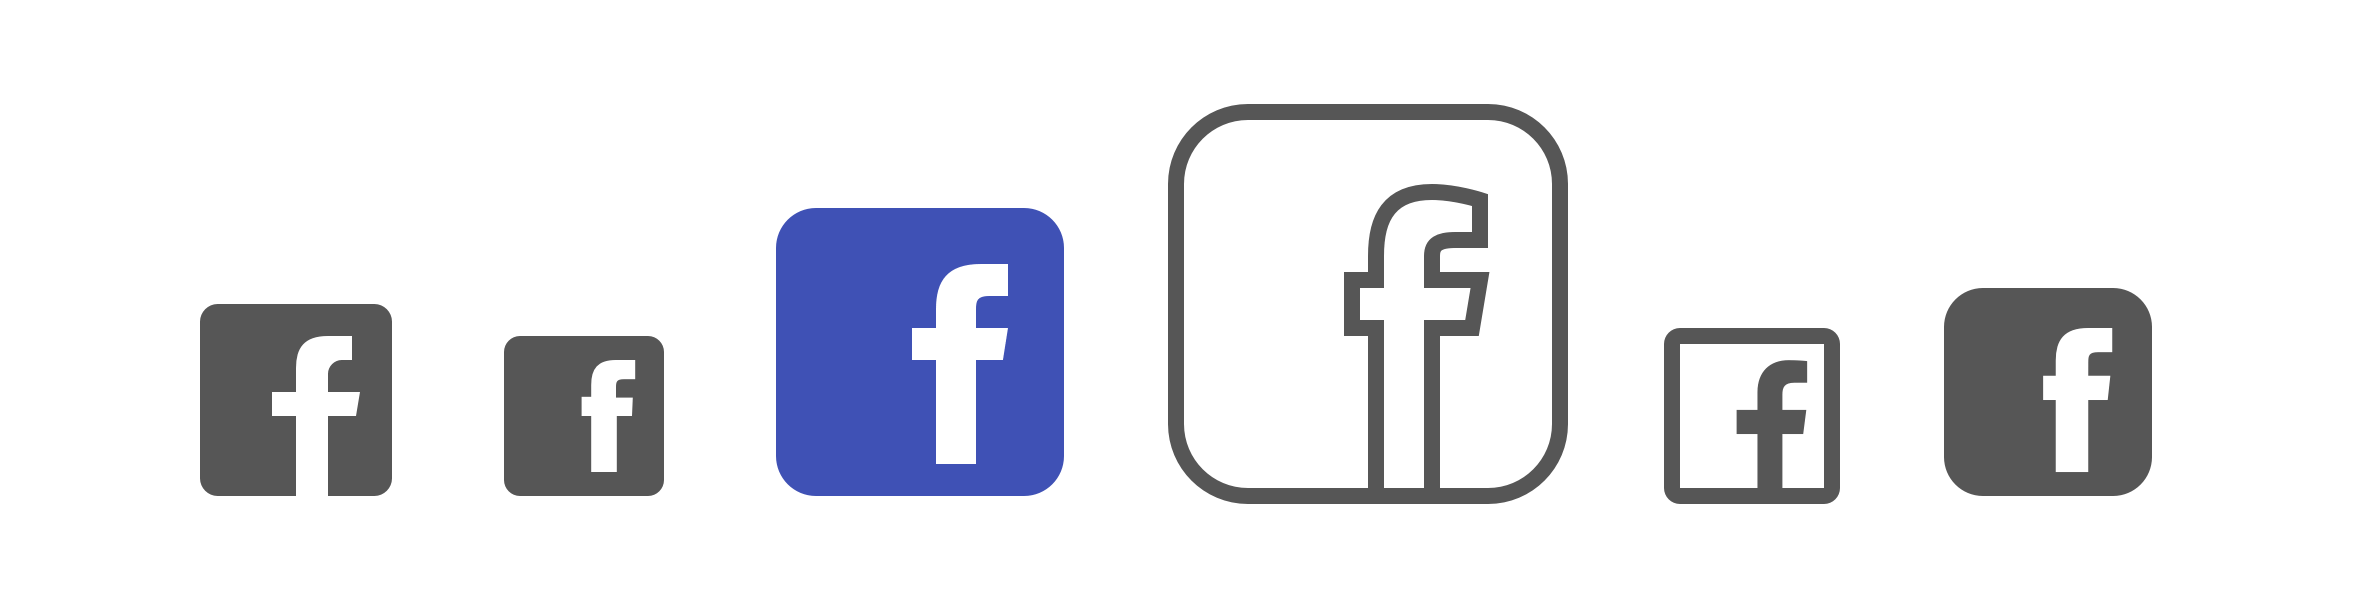 Original Facebook Logo - Free Original Facebook Icon 213236. Download Original Facebook Icon